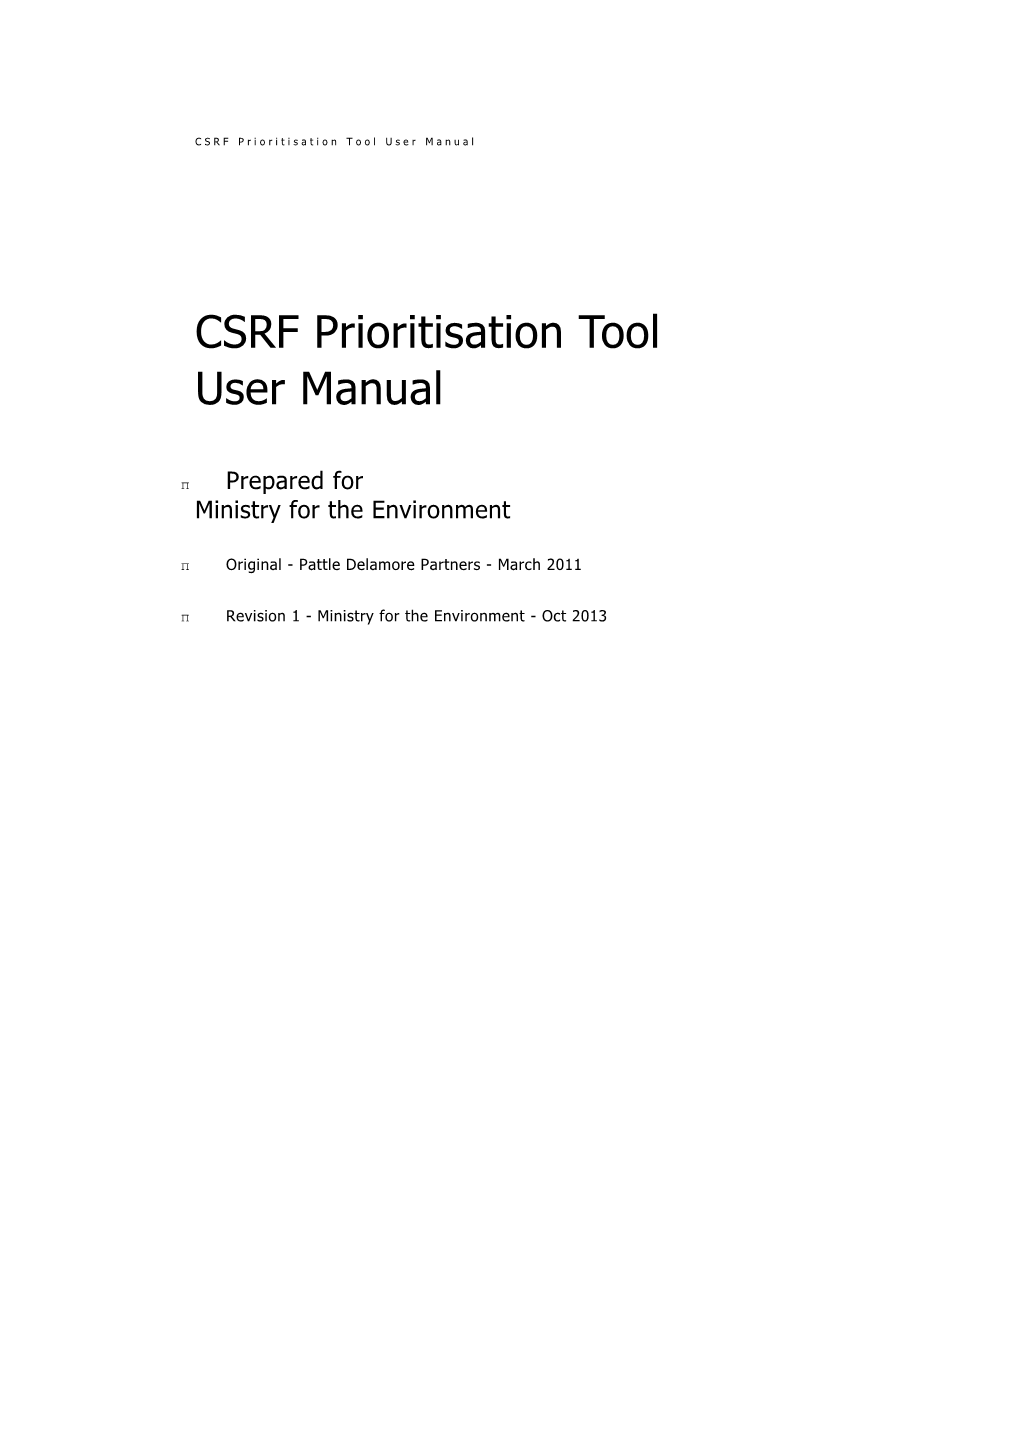 CSRF Prioritisation Tool - User Manual - Revision 1